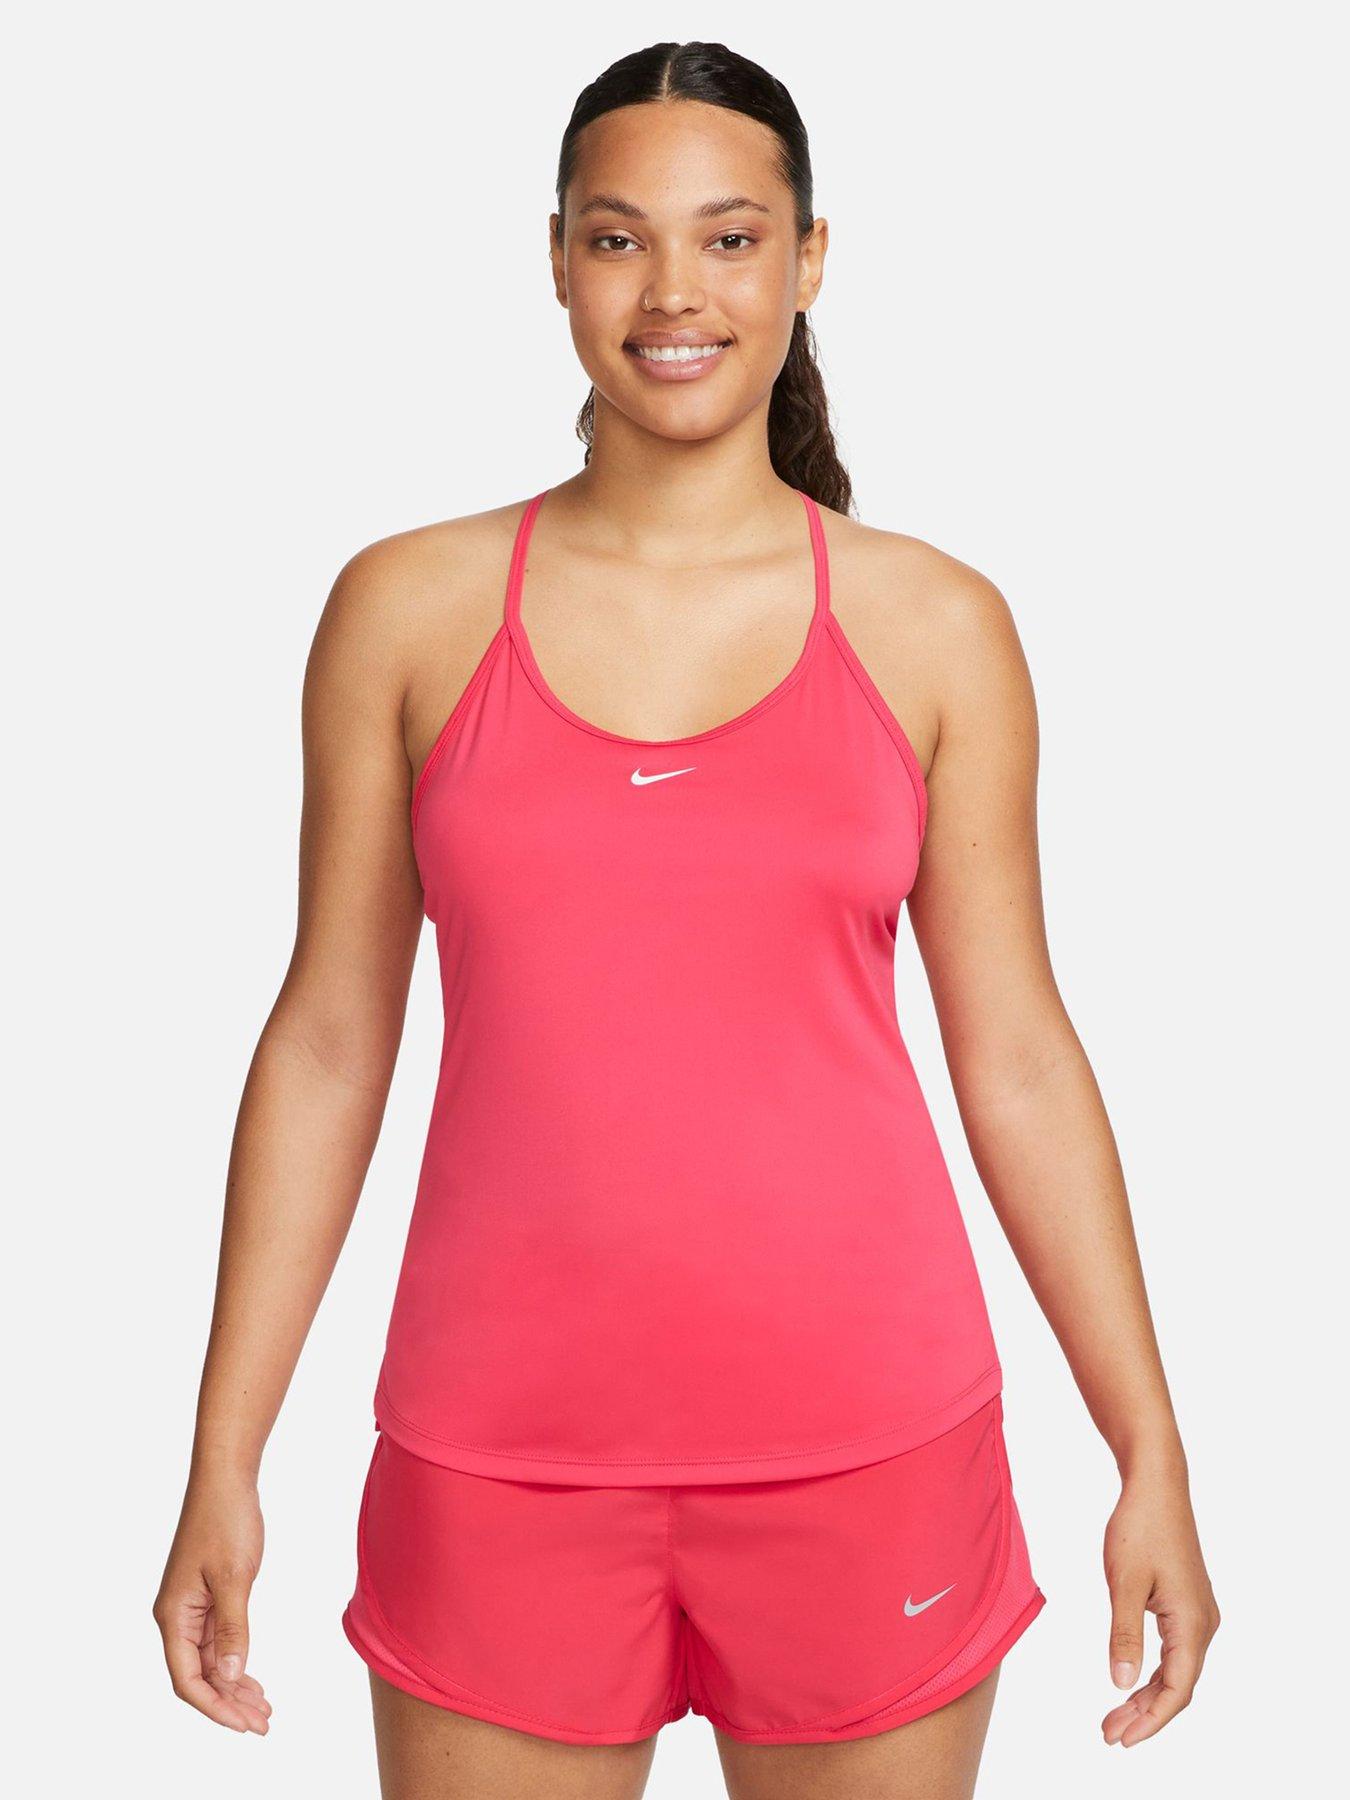 Nike Women's One Dri Fit Logo Racerback Tank Top Pink Size Small 